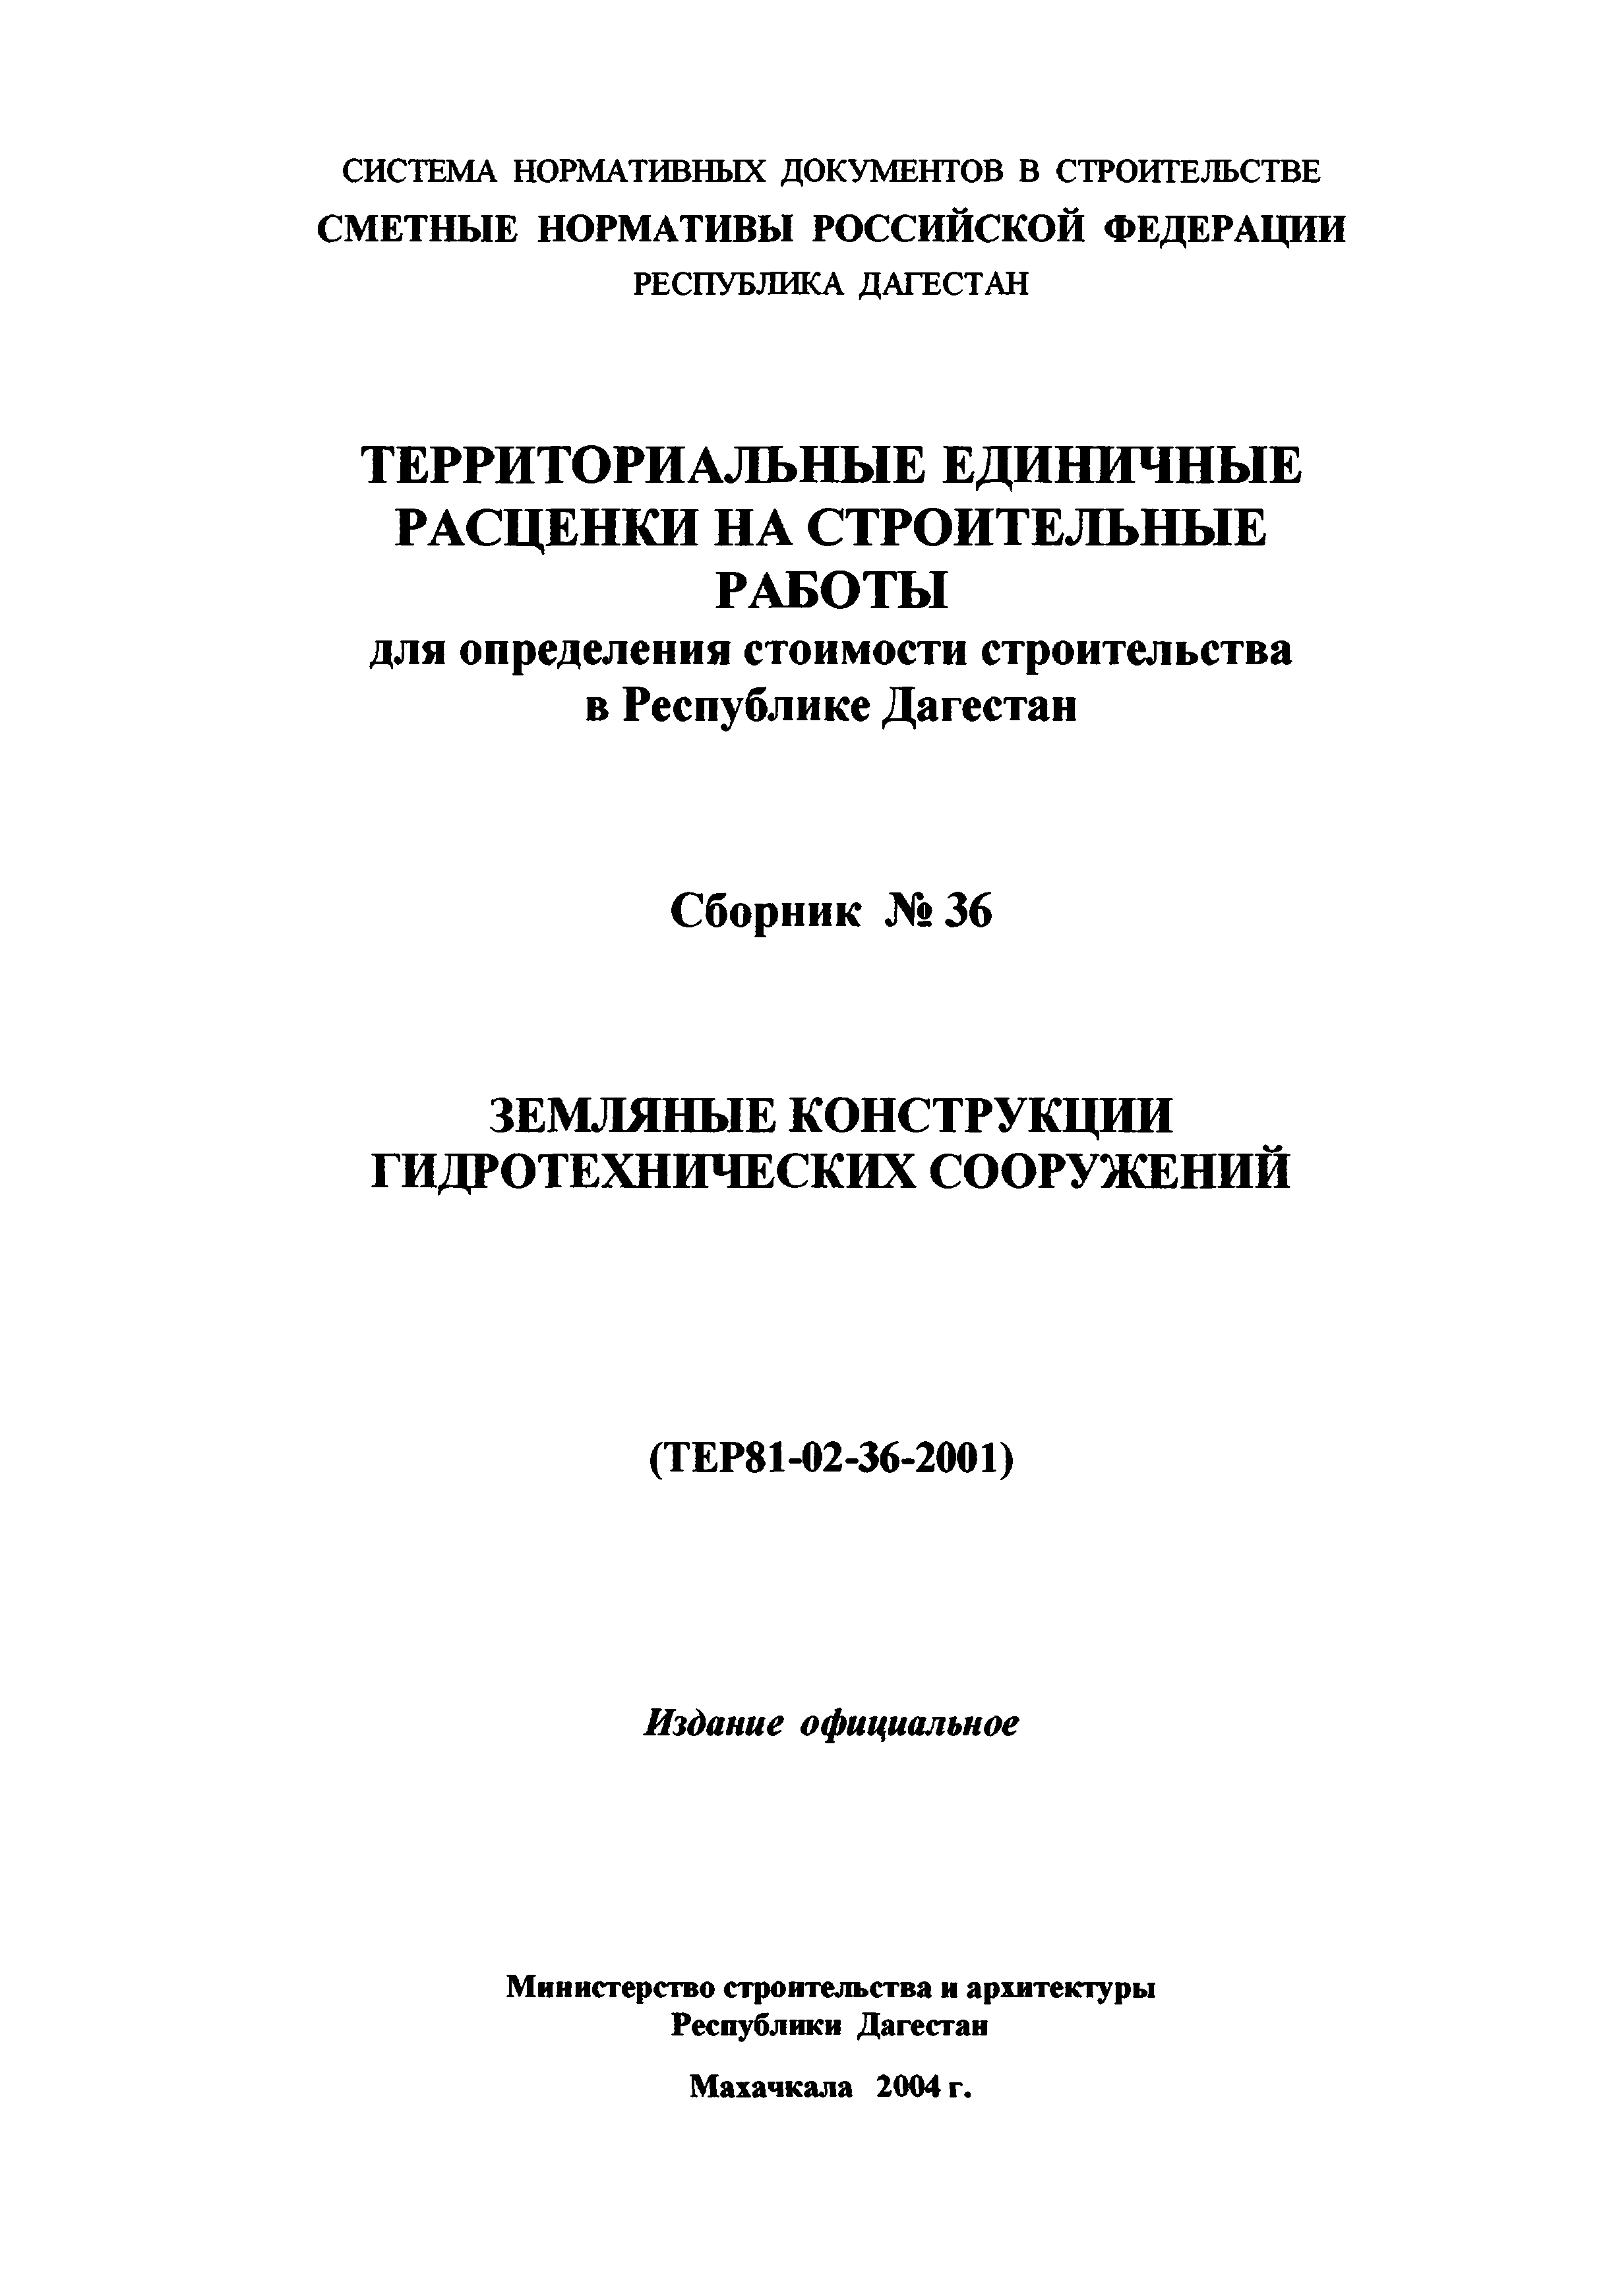 ТЕР Республика Дагестан 2001-36